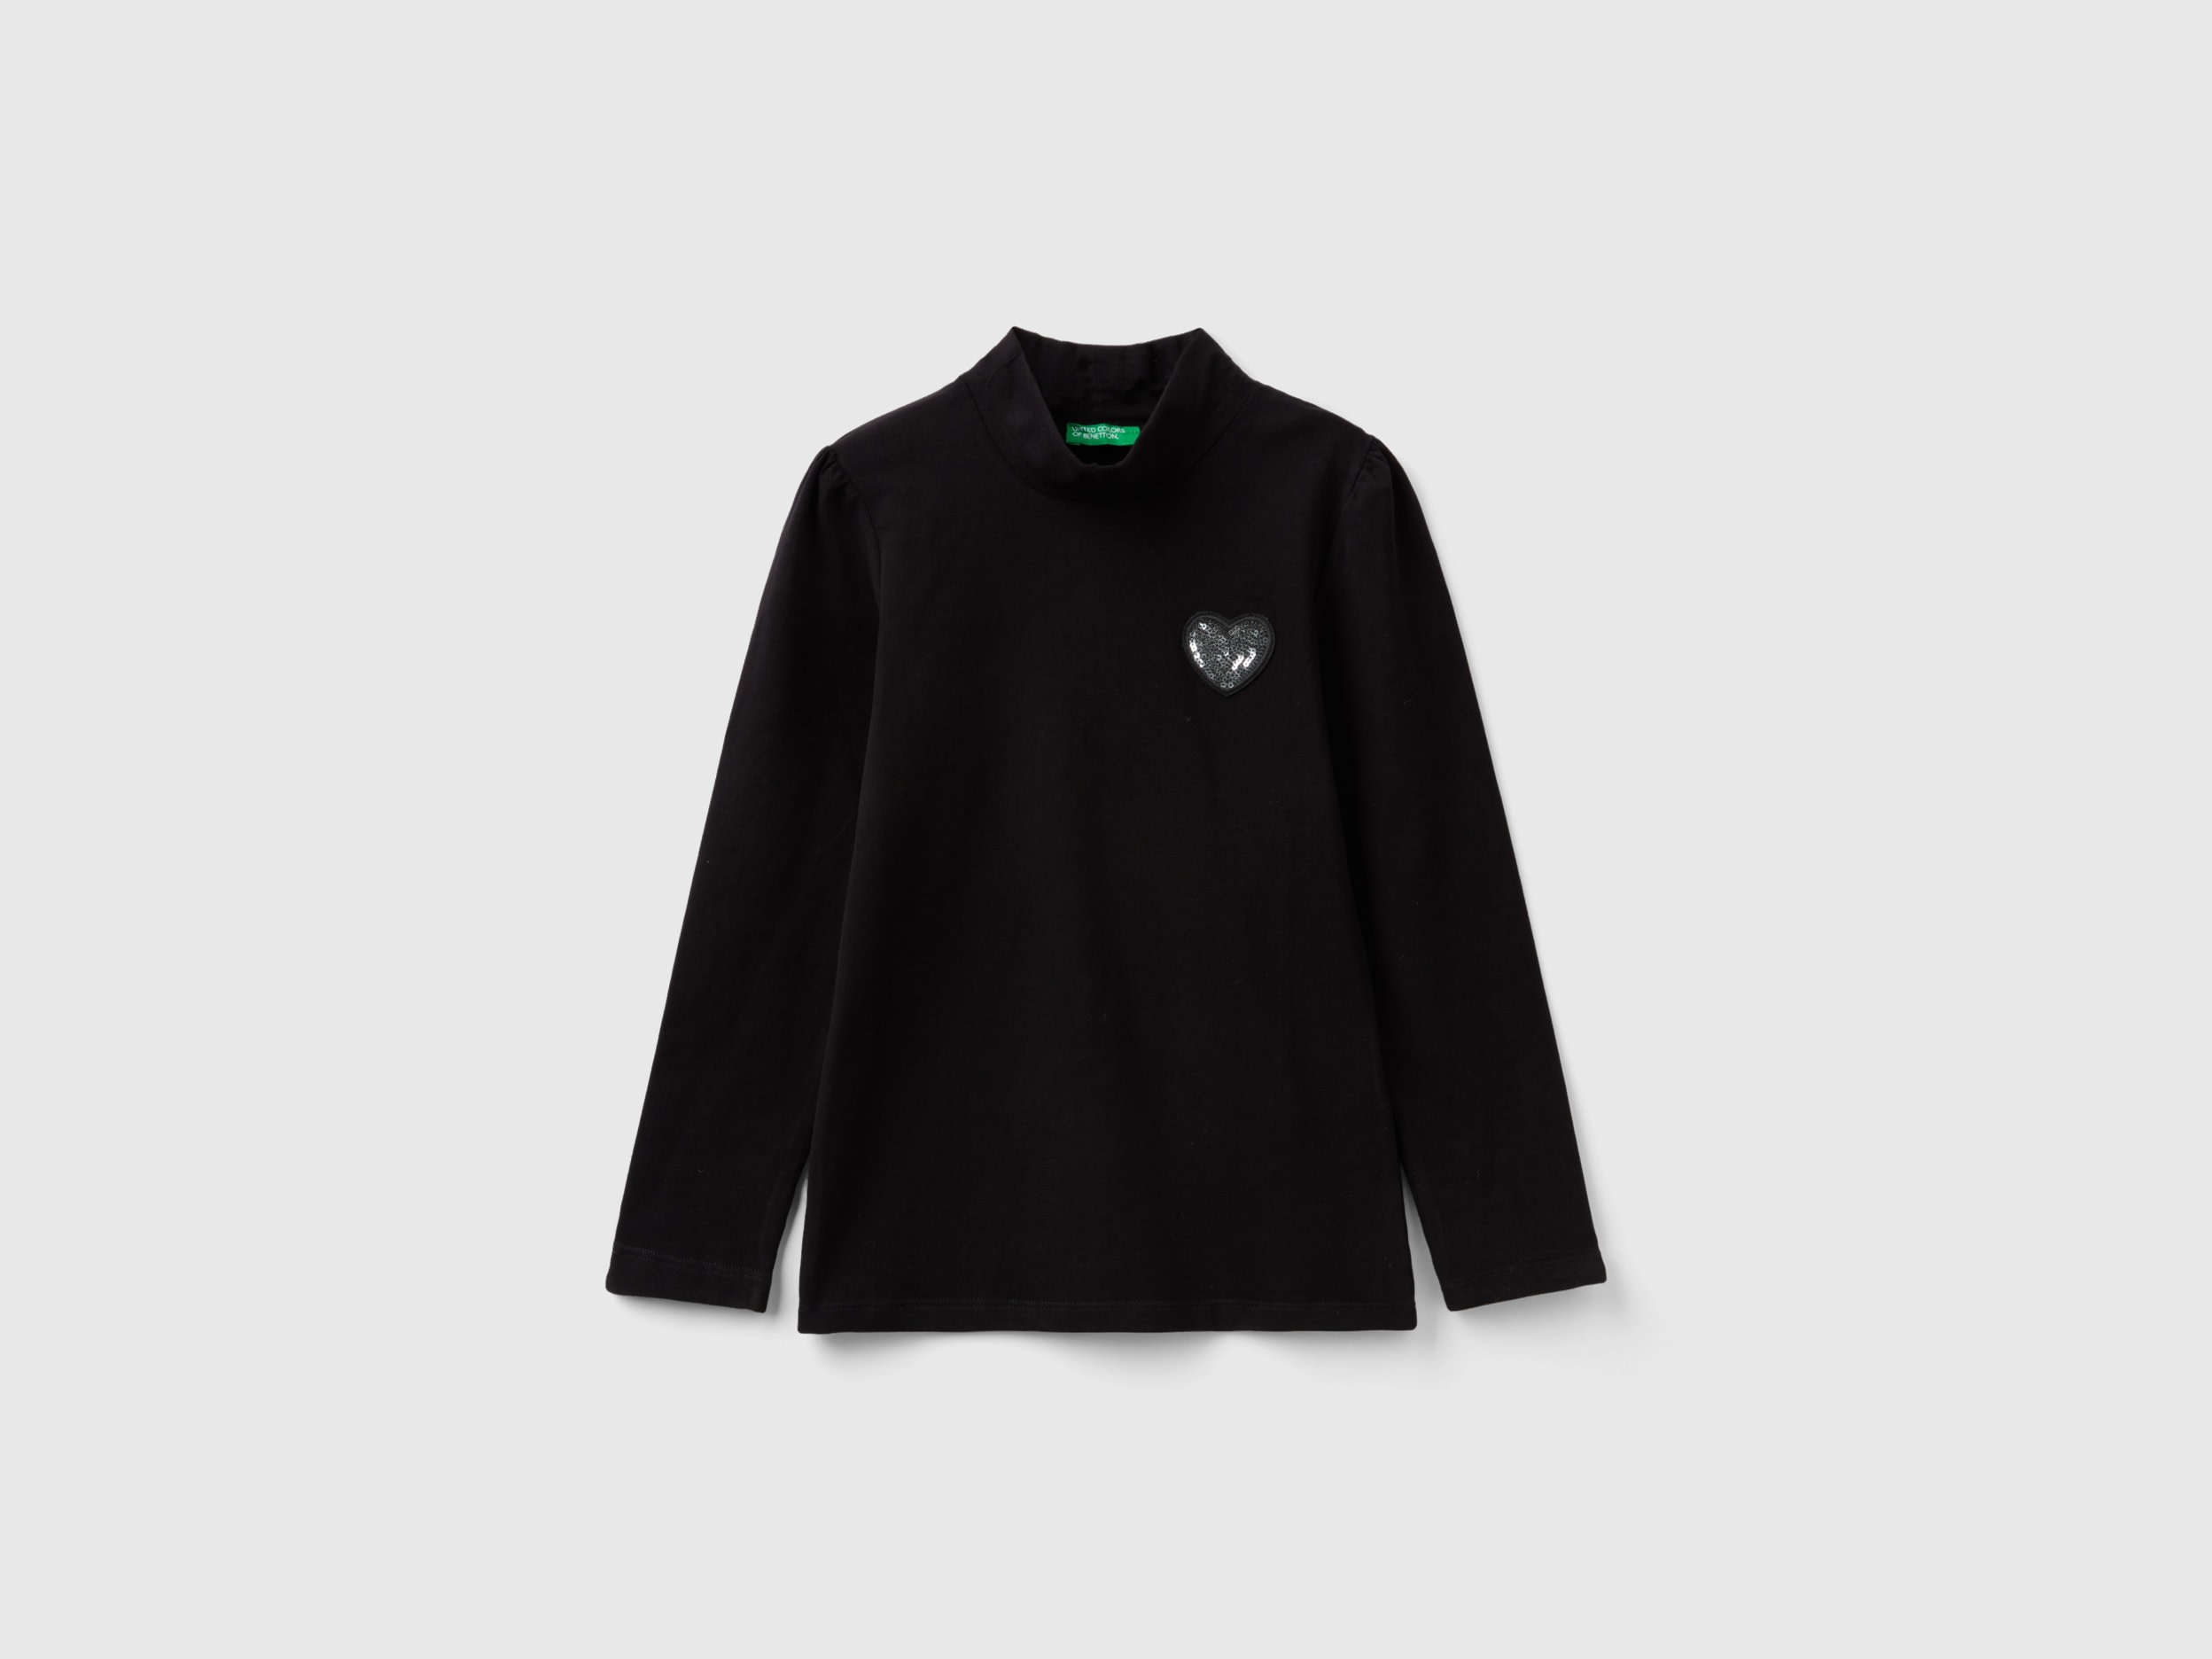 Benetton, Turtle Neck T-shirt Con Sequined Patch, size 3XL, Black, Kids